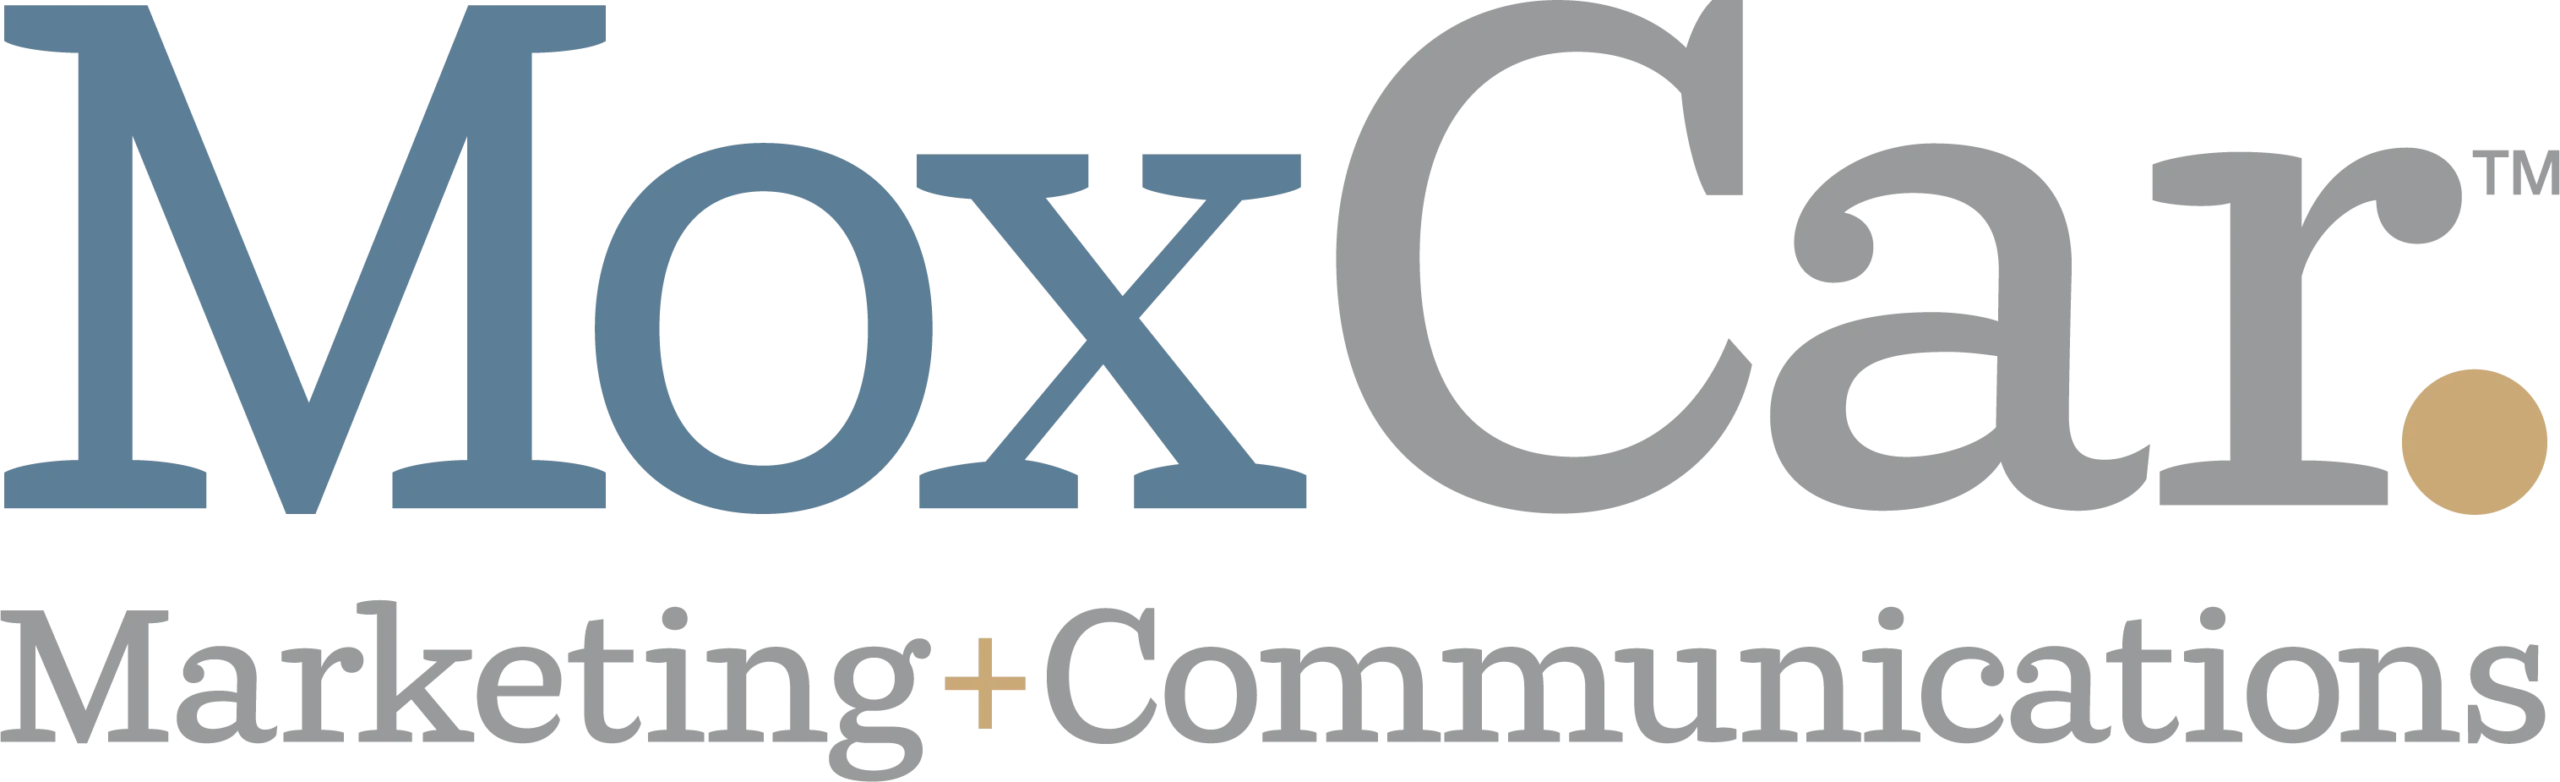 MoxCar Marketing & Communications Logo